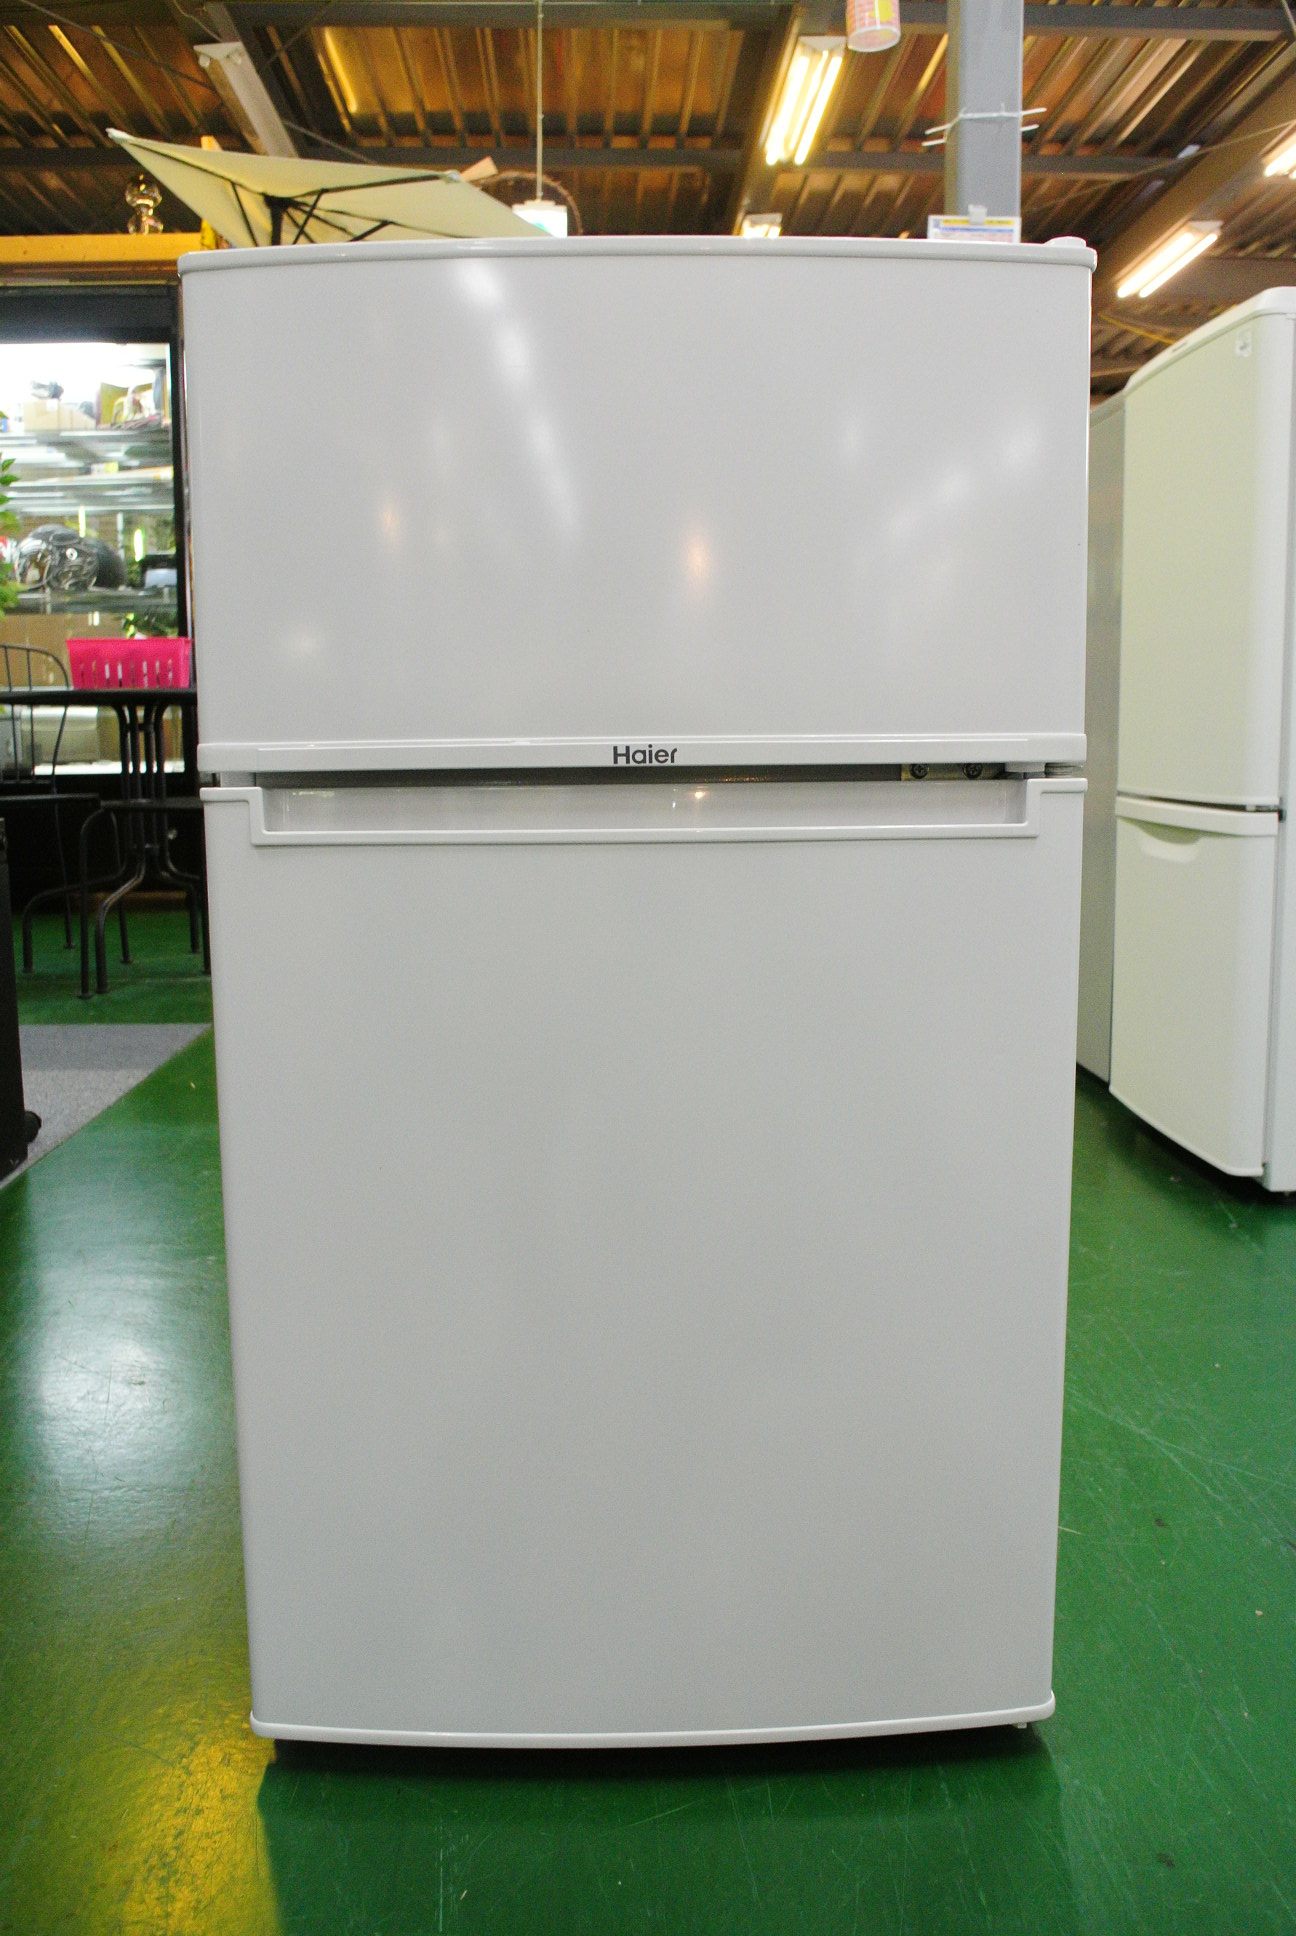 Haier(ハイアール) 85L 2ドア冷蔵庫 JR-N85B。安い中古冷蔵庫は愛品 